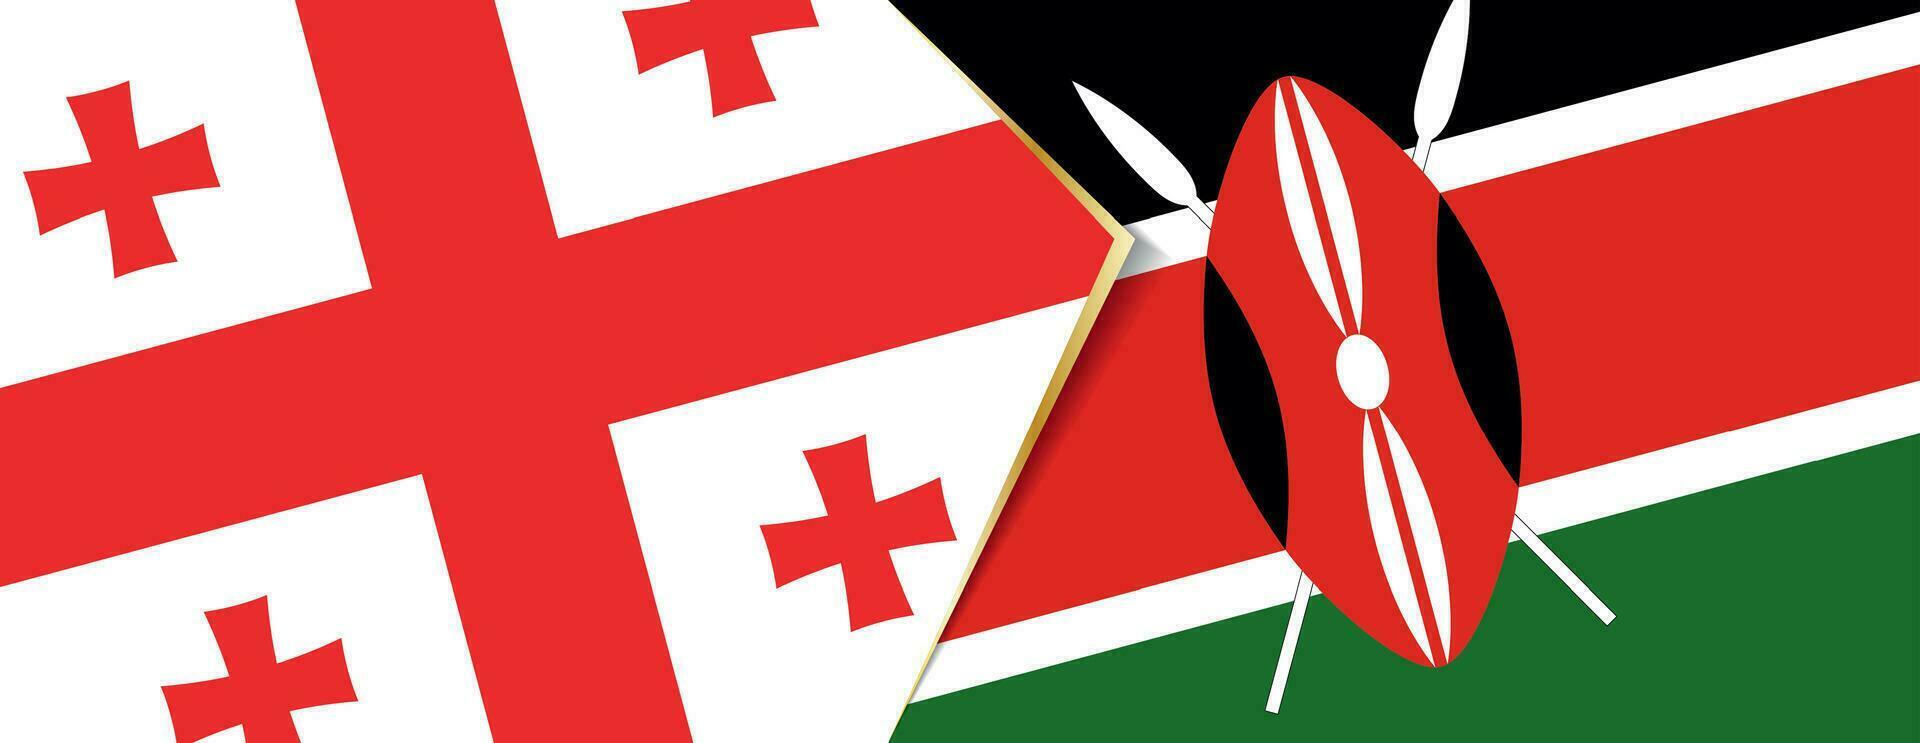 Georgia und Kenia Flaggen, zwei Vektor Flaggen.